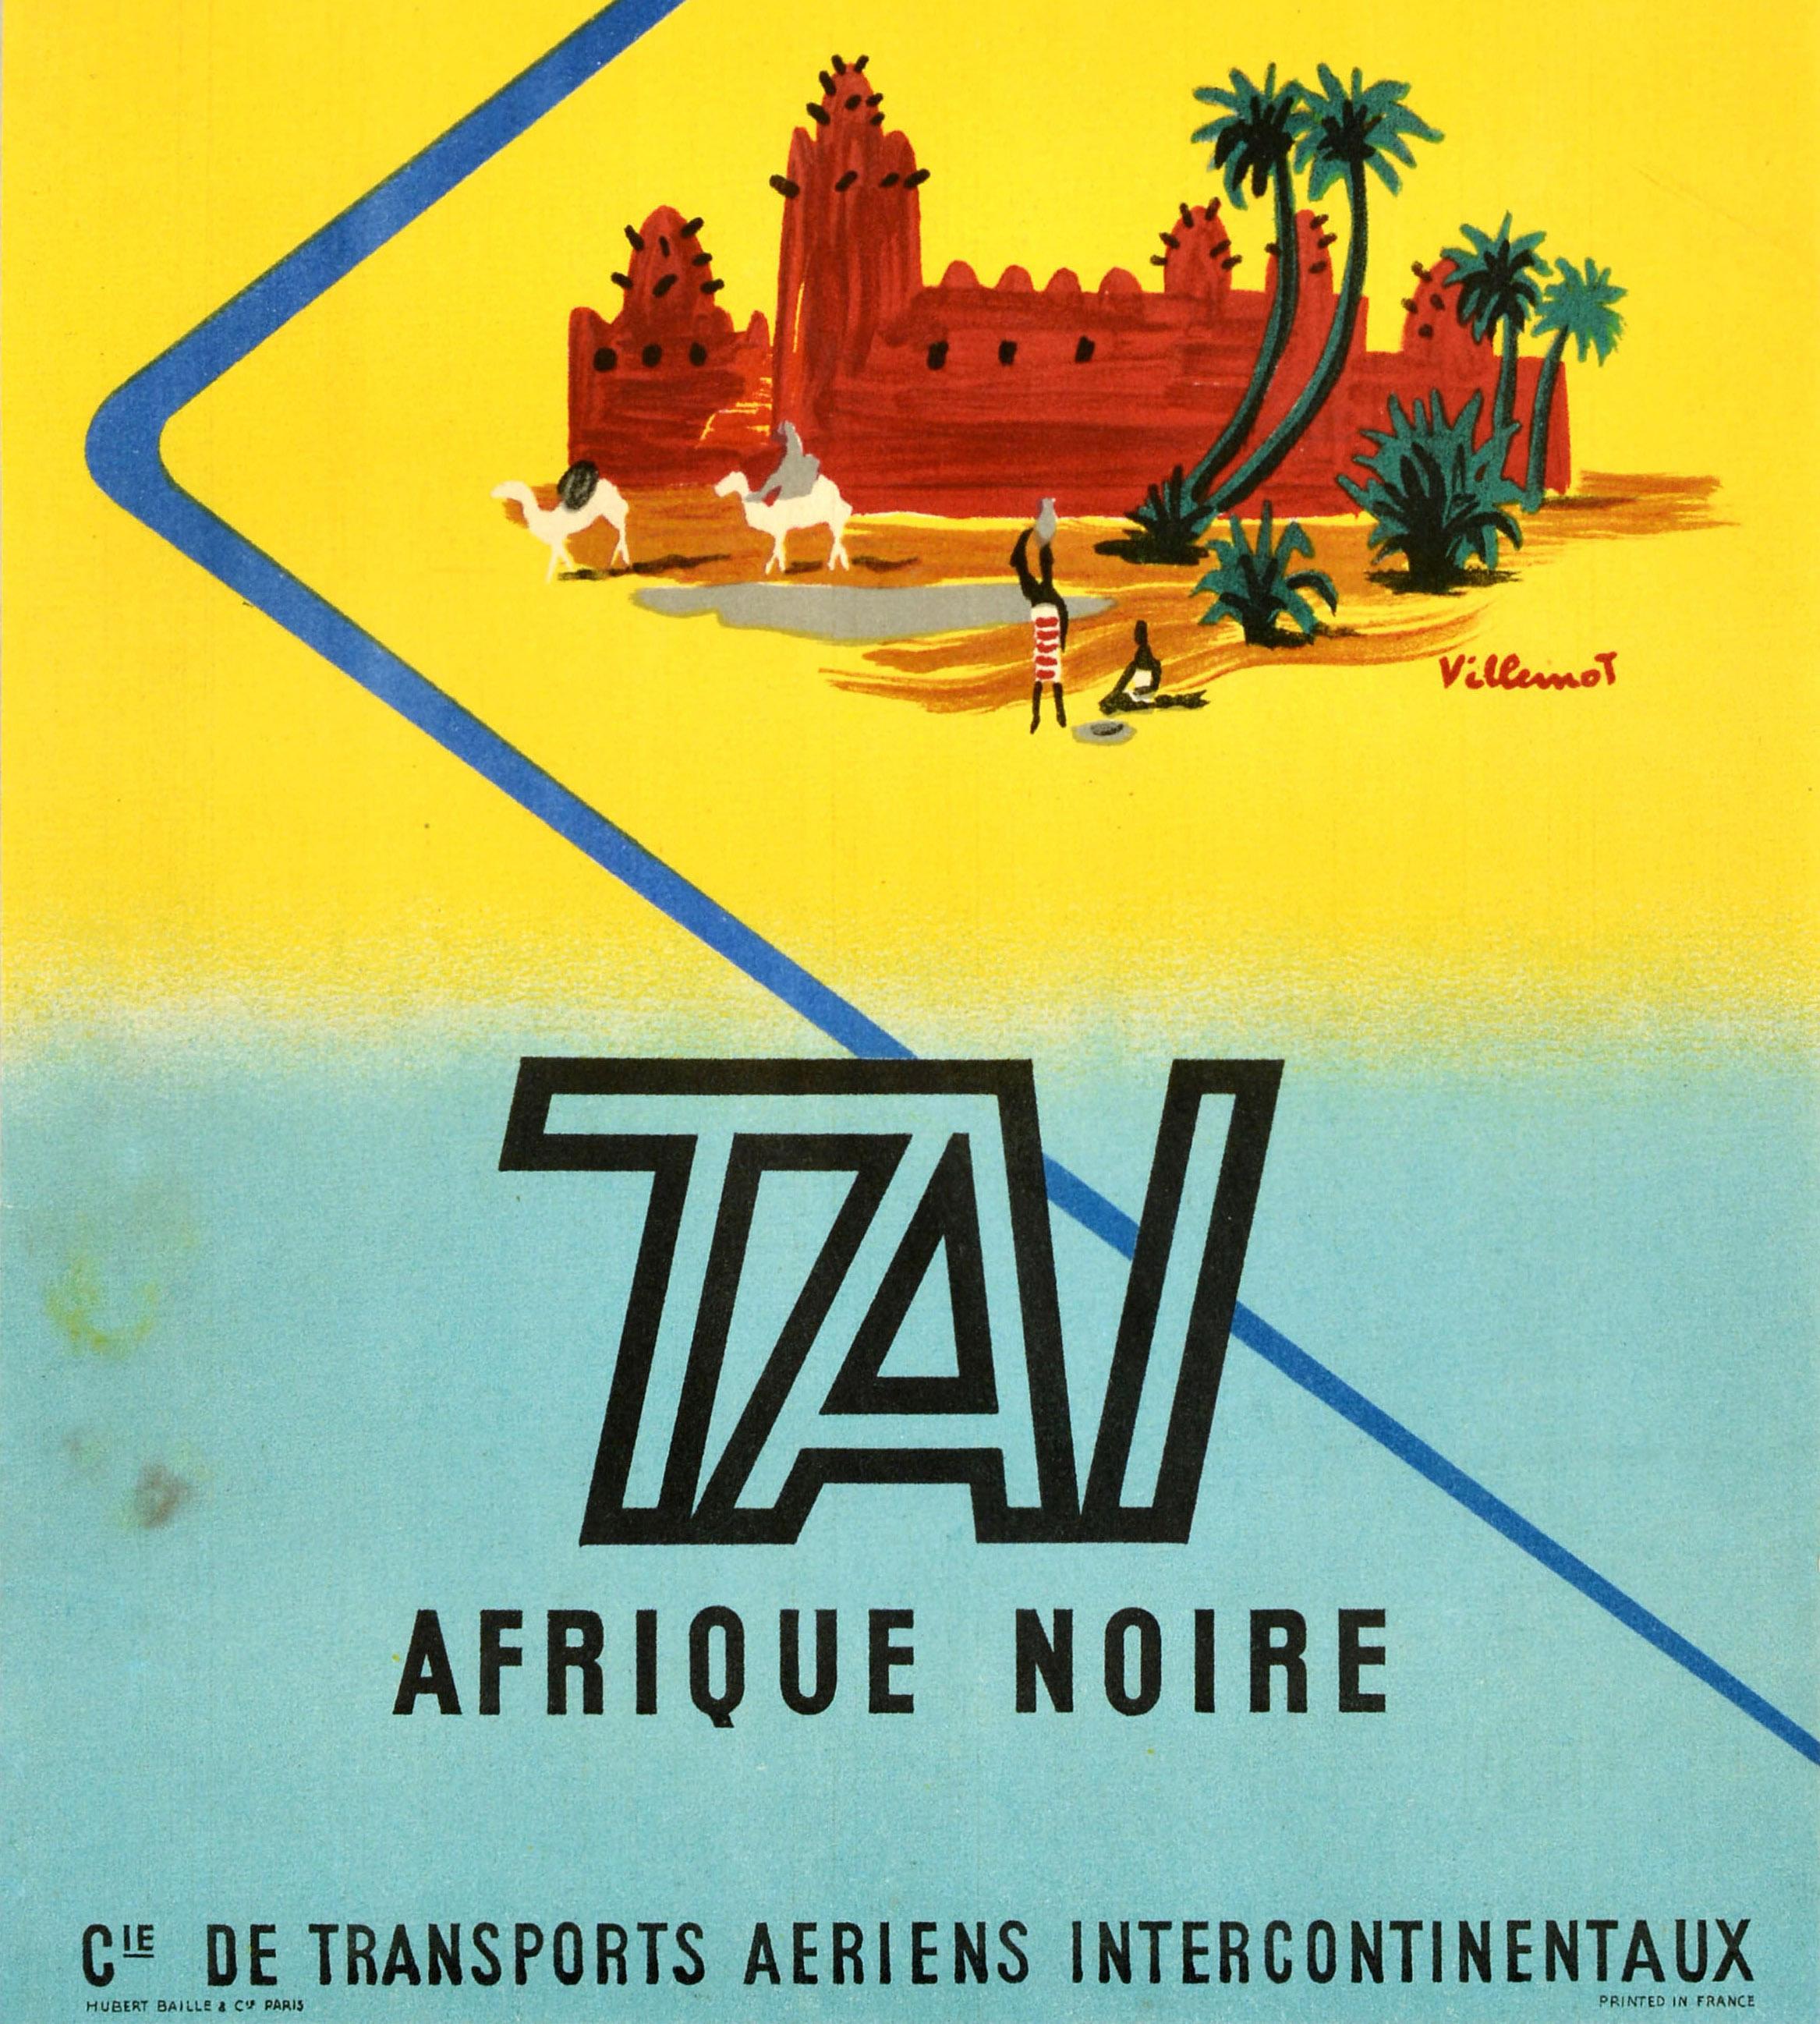 Original Vintage Travel Poster TAI Afrique Noire Sub Sahara Africa Villemot Art In Good Condition For Sale In London, GB